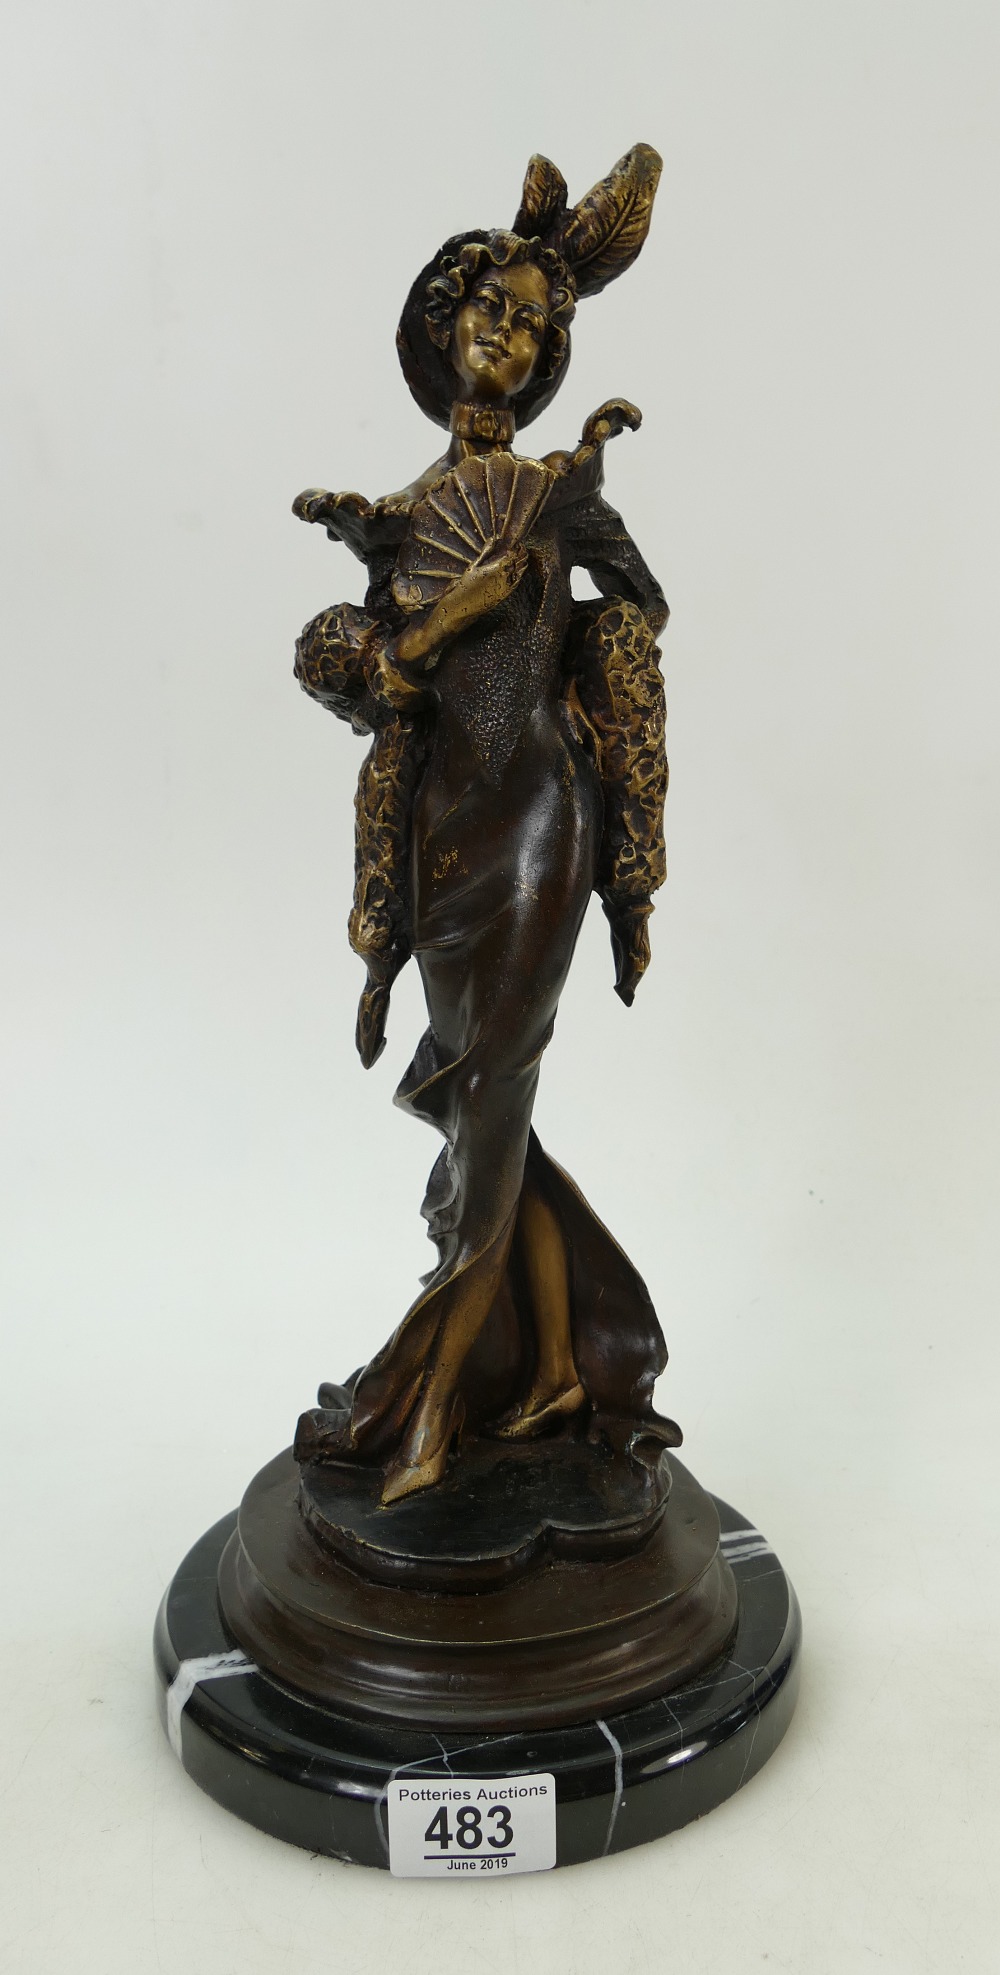 Bronze Figure: Large Figure of a Lady wi